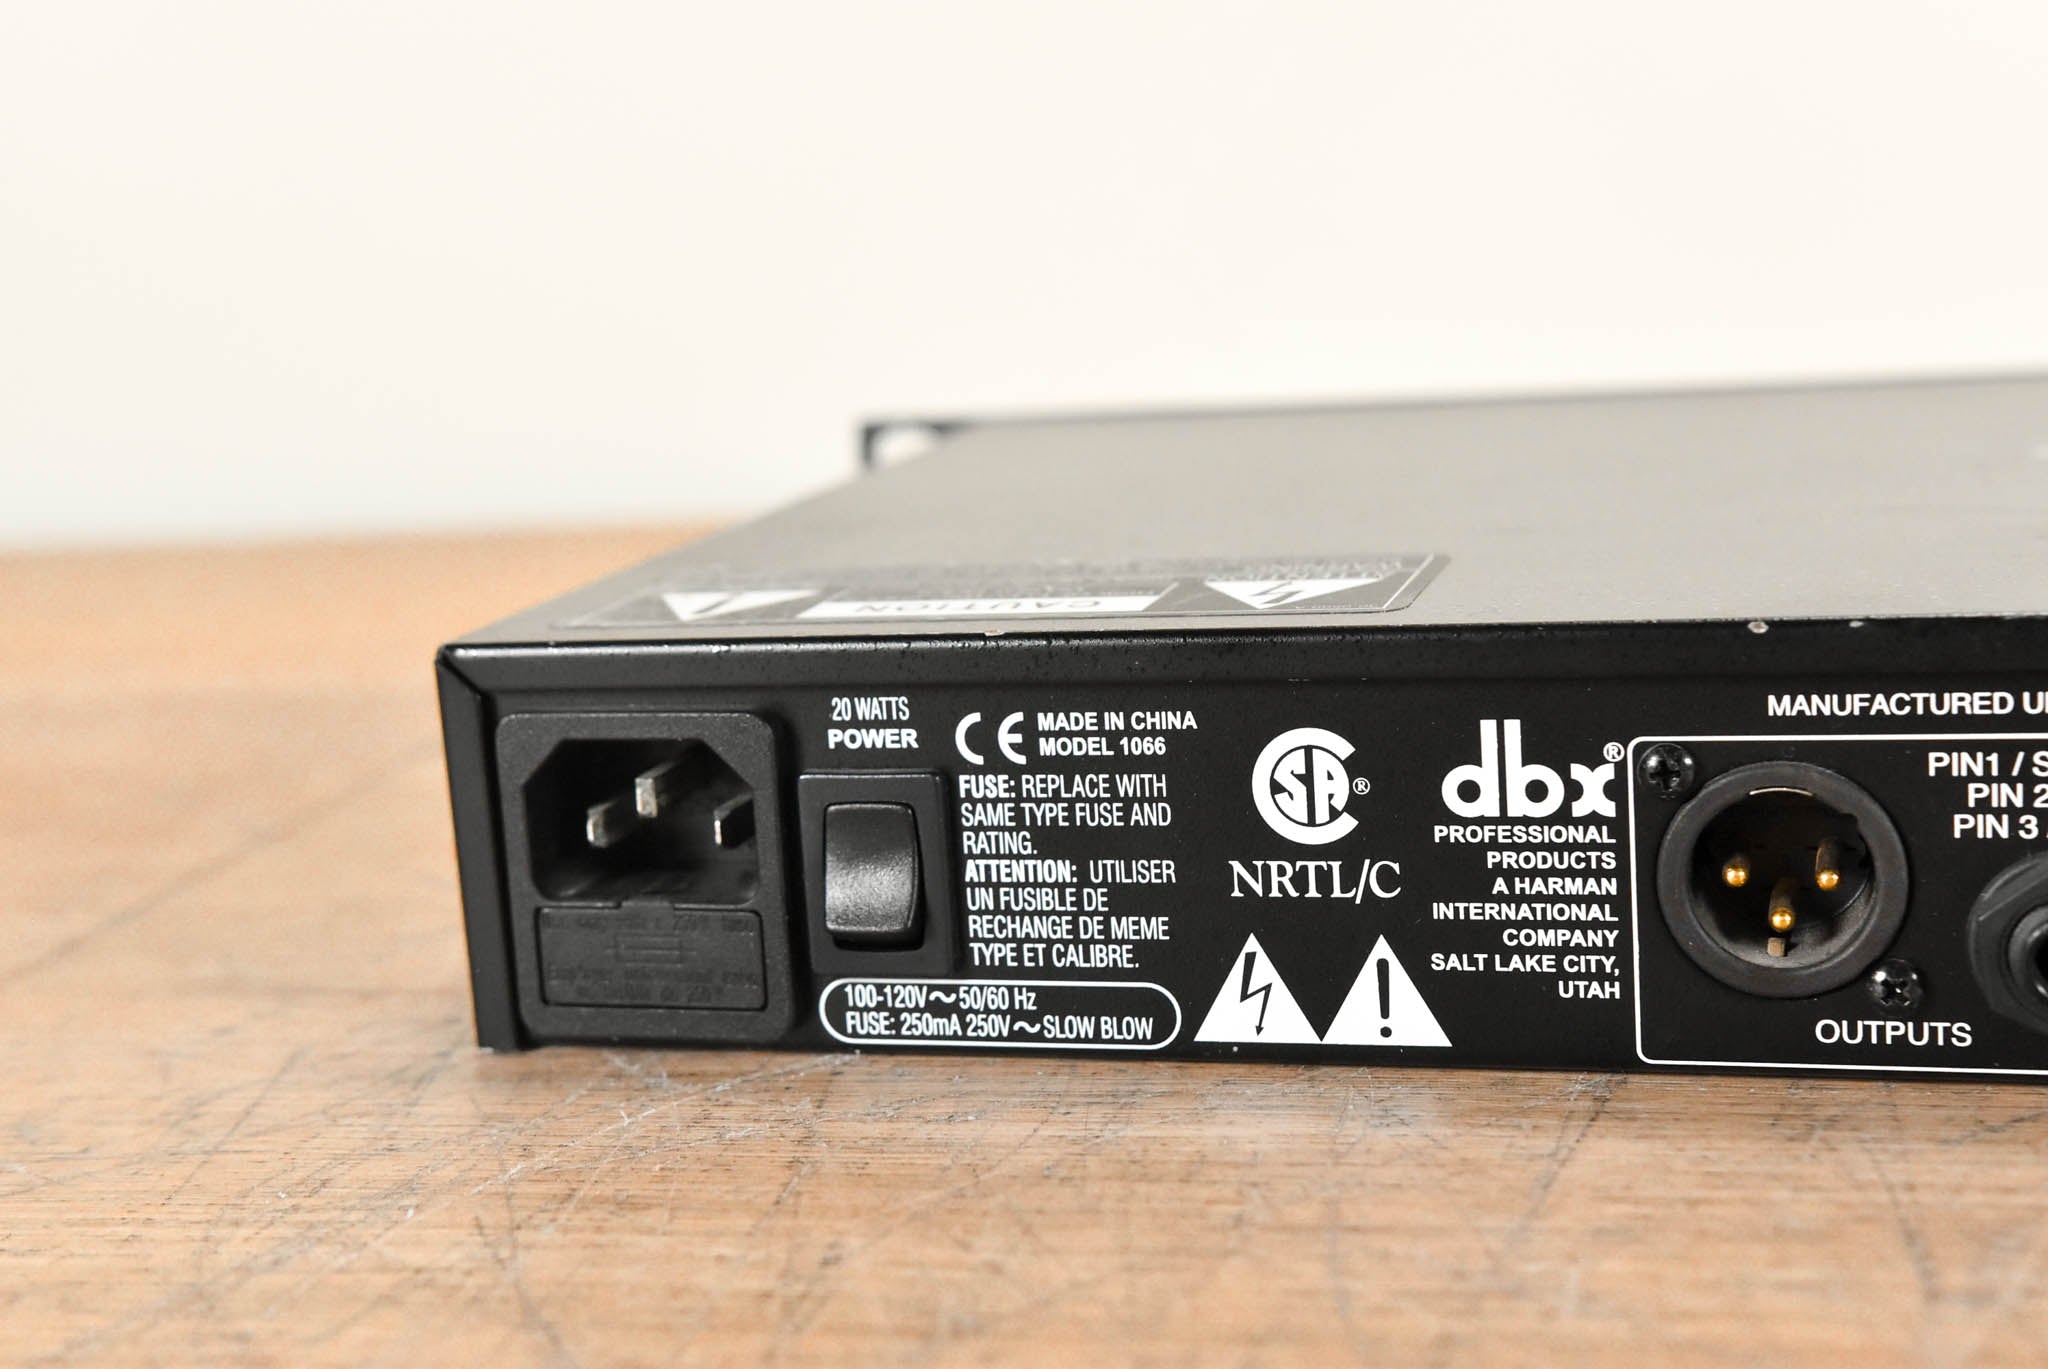 dbx 1066 2-Channel Compressor/Limiter/Gate